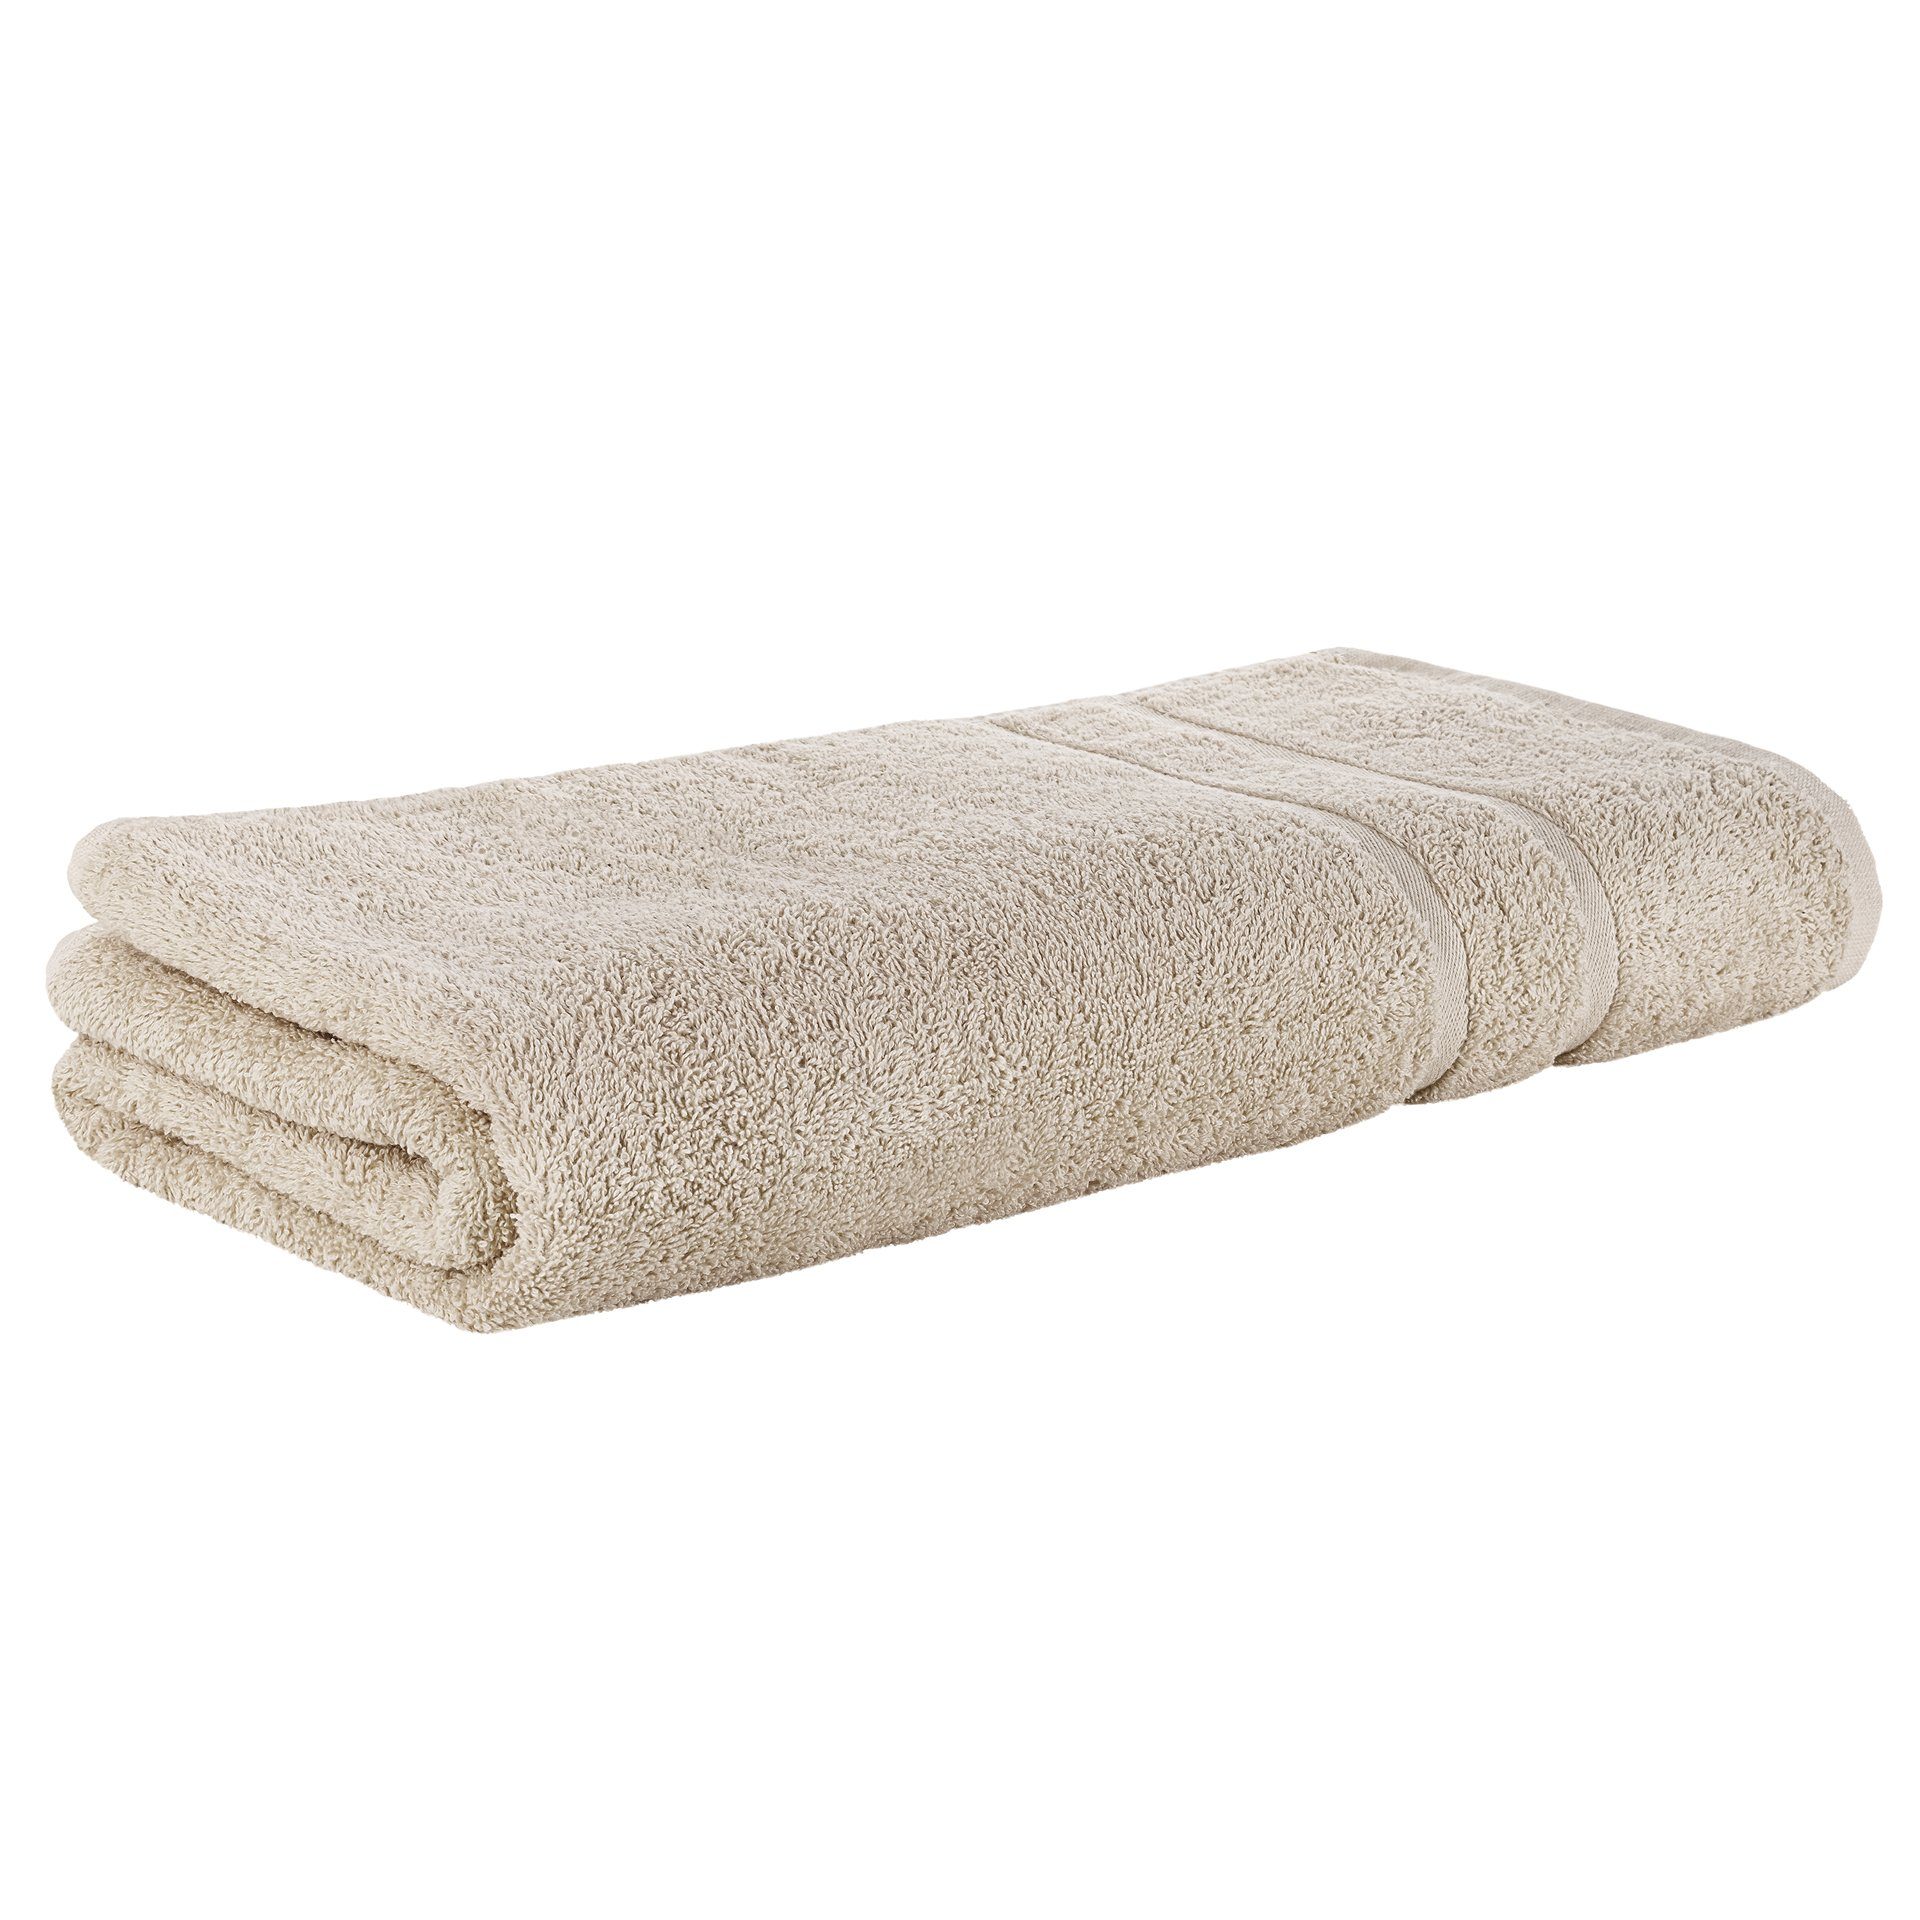 Saunatücher Baumwolle in zur 100% Handtücher Sand Wahl 500 Badetücher Gästehandtücher StickandShine GSM Duschtücher Handtuch